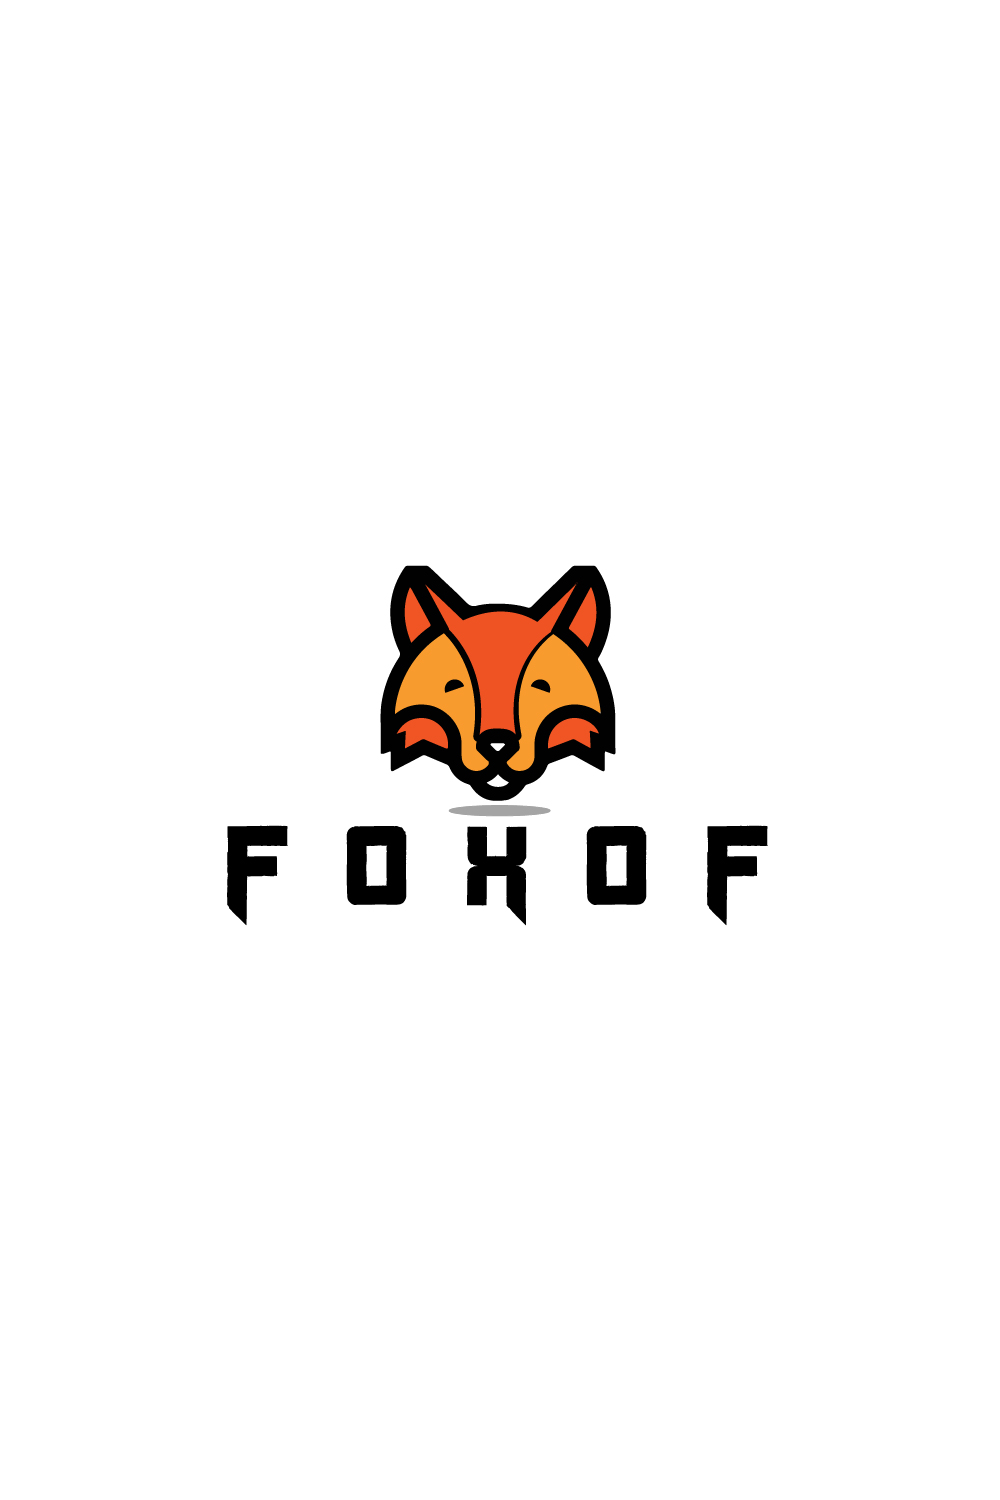 Foxof logo design/ animal logo pinterest preview image.